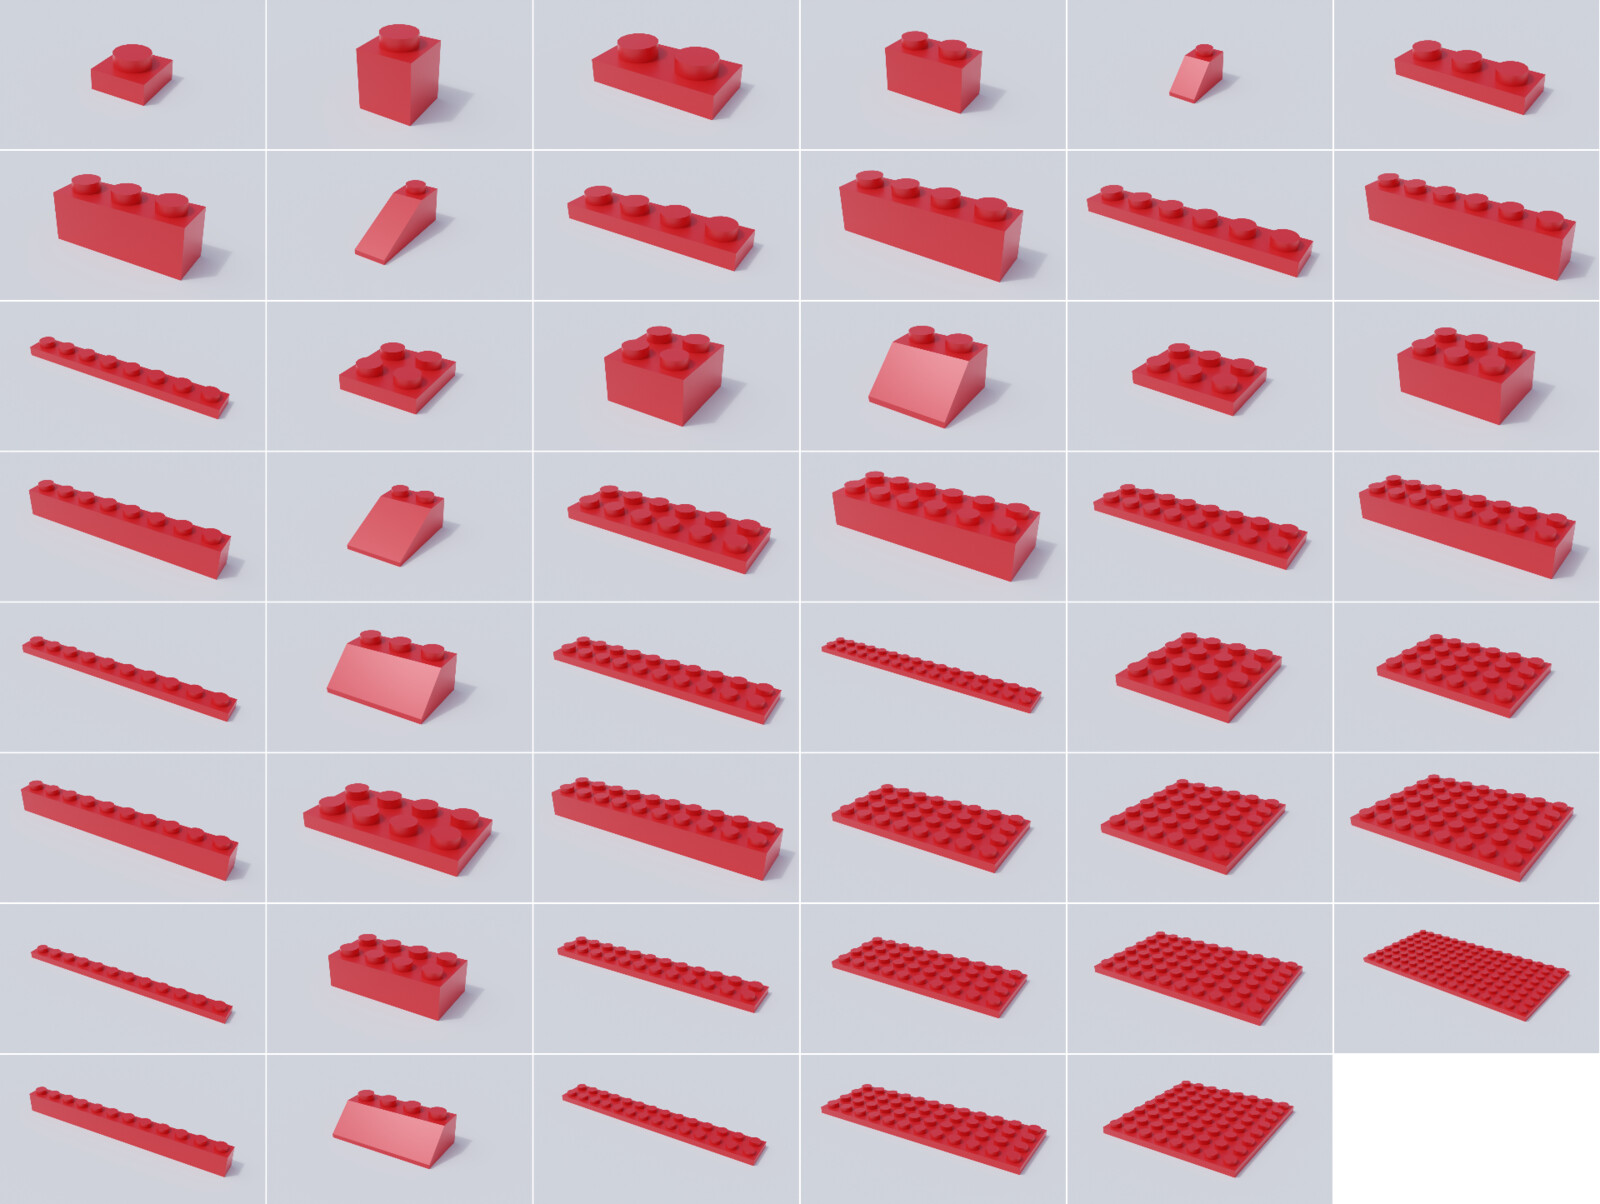 Lego Brick Collection Collage (All Bricks)